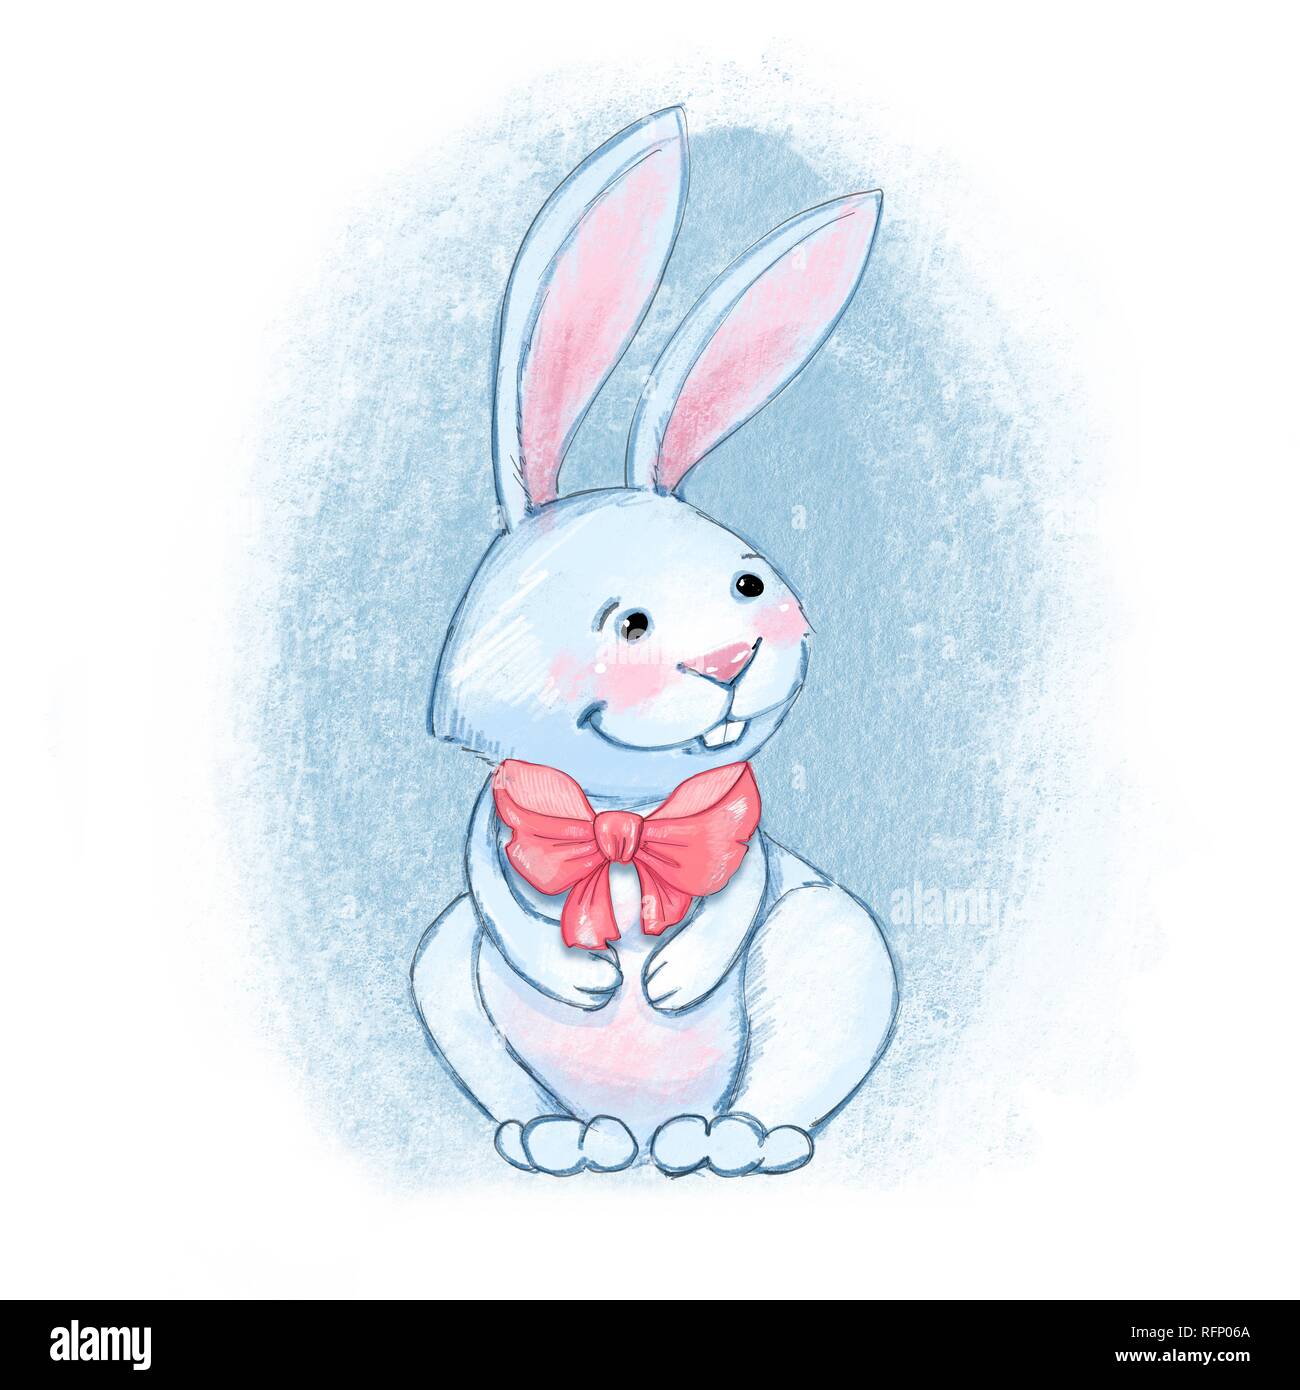 White Rabbit. Cute cartoon illustration Stock Photo